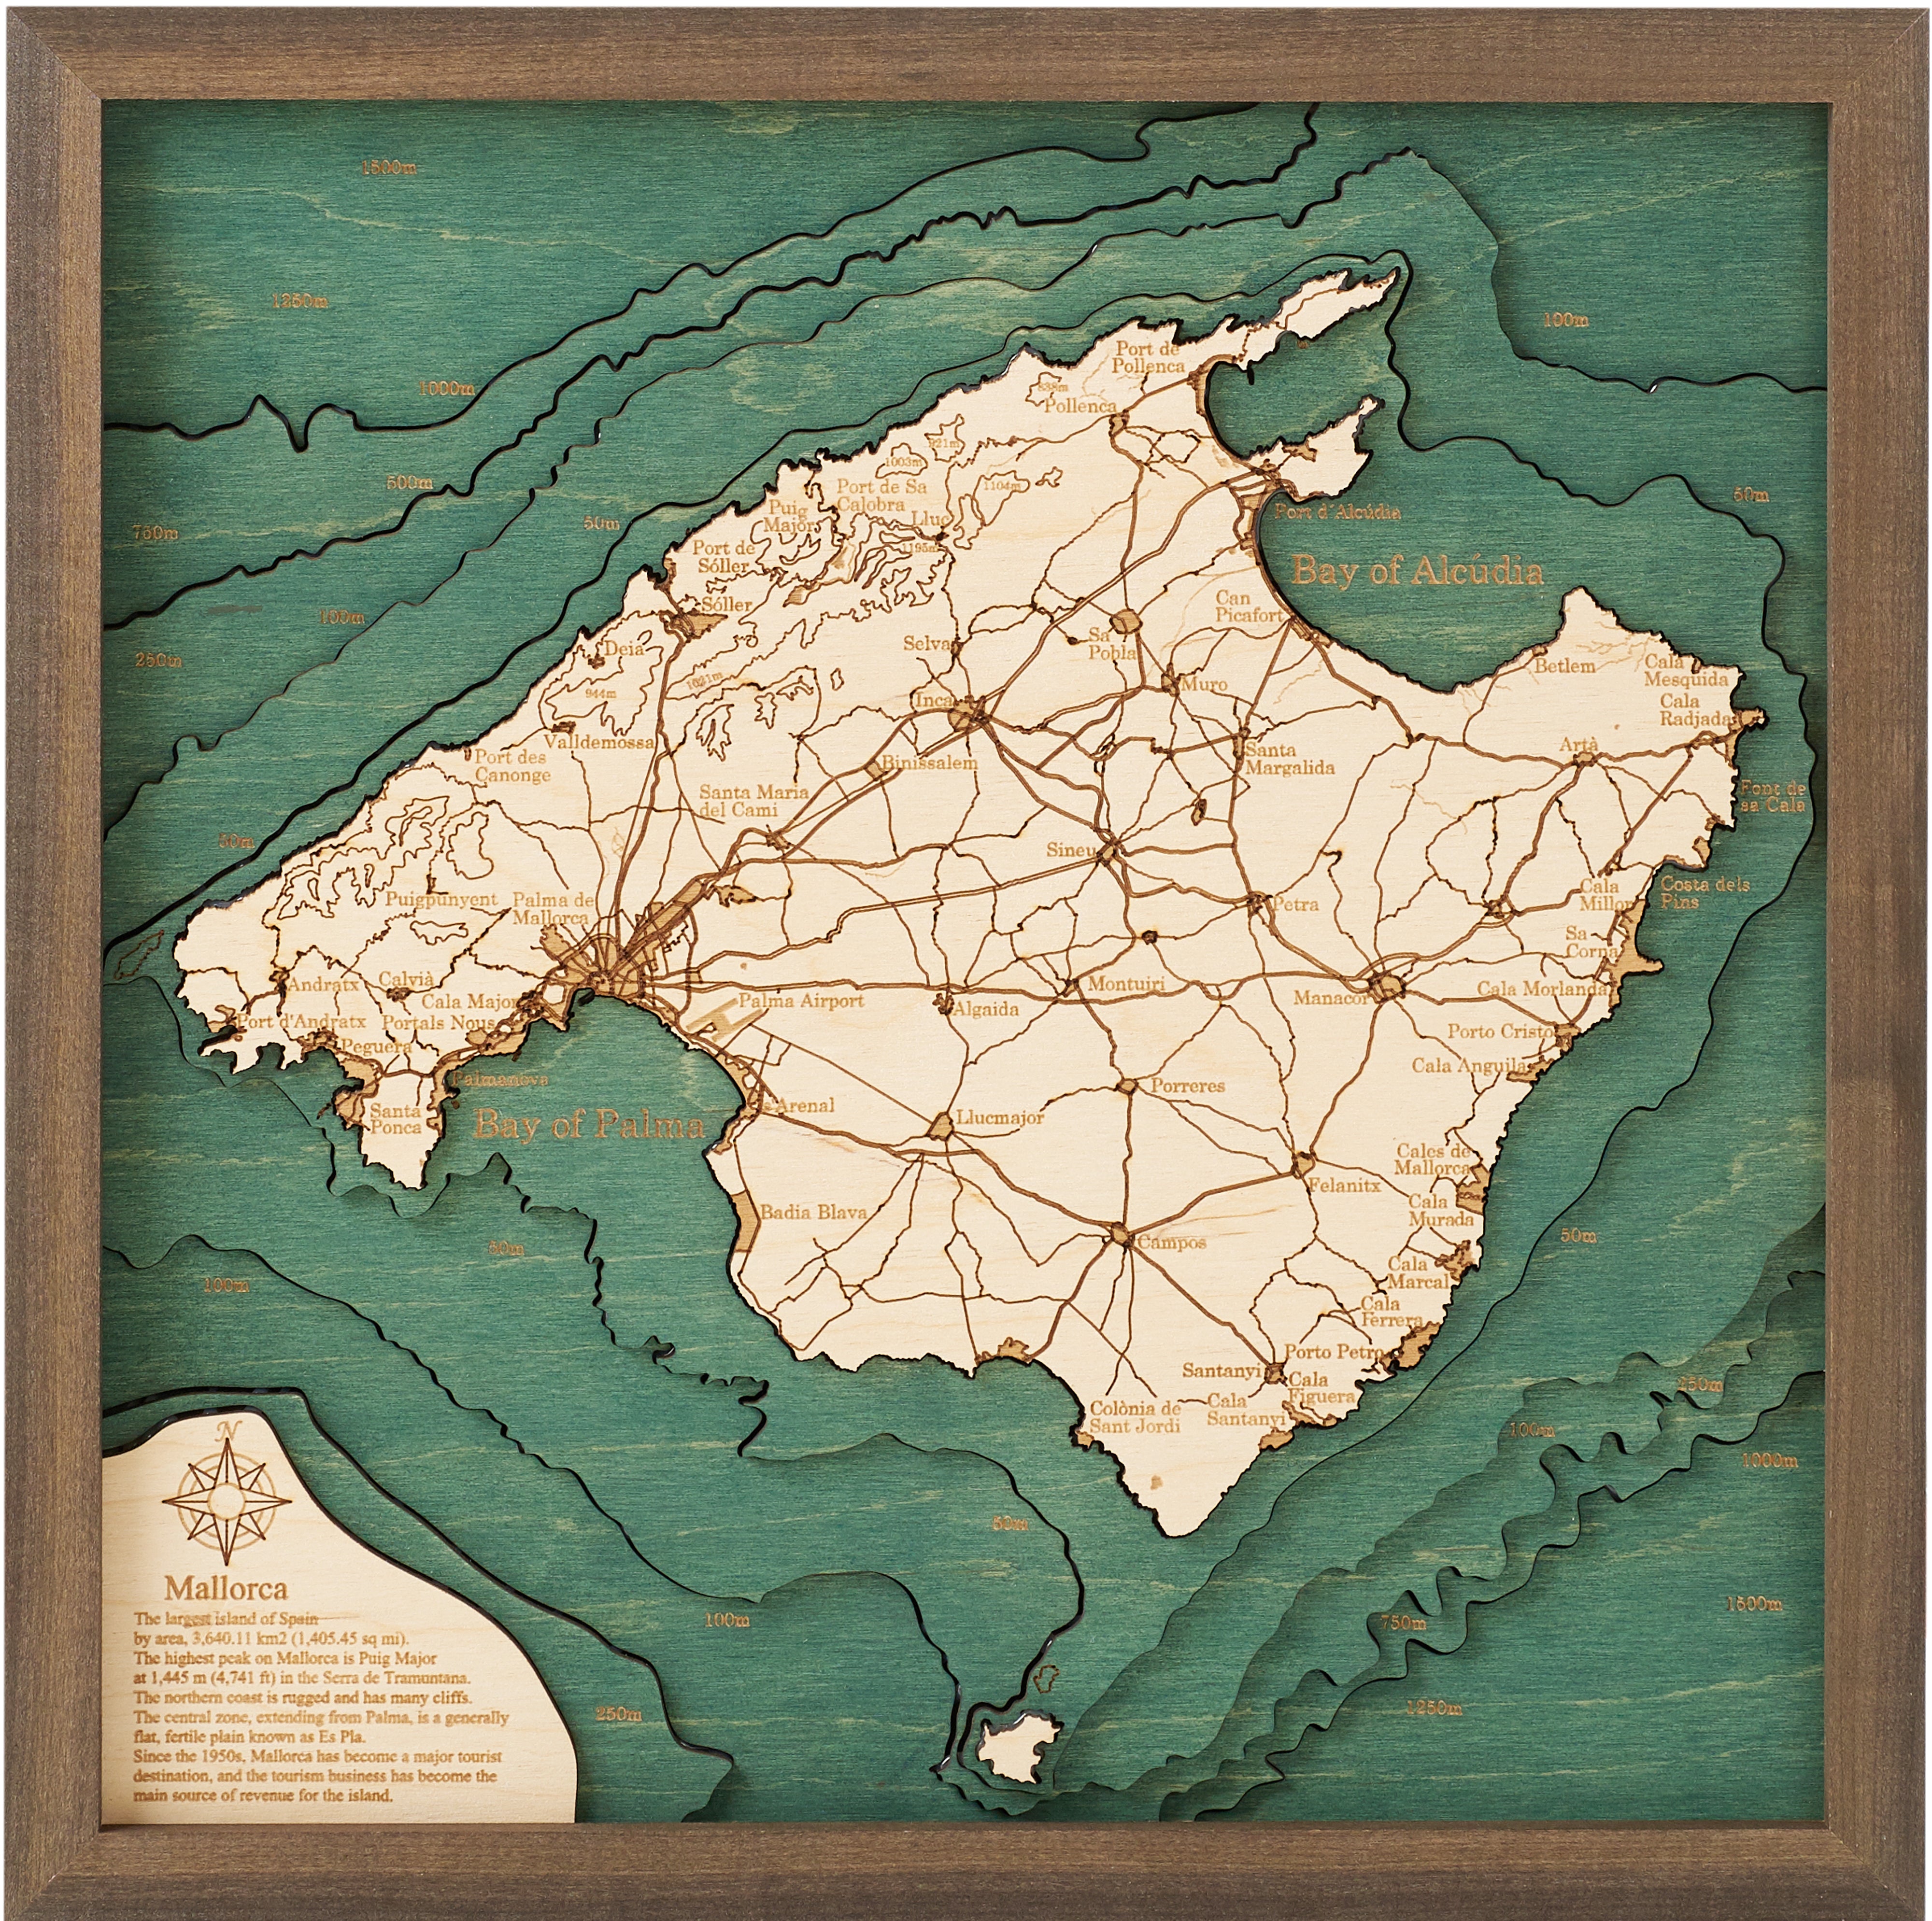 MALLORCA 3D wooden wall map - version S